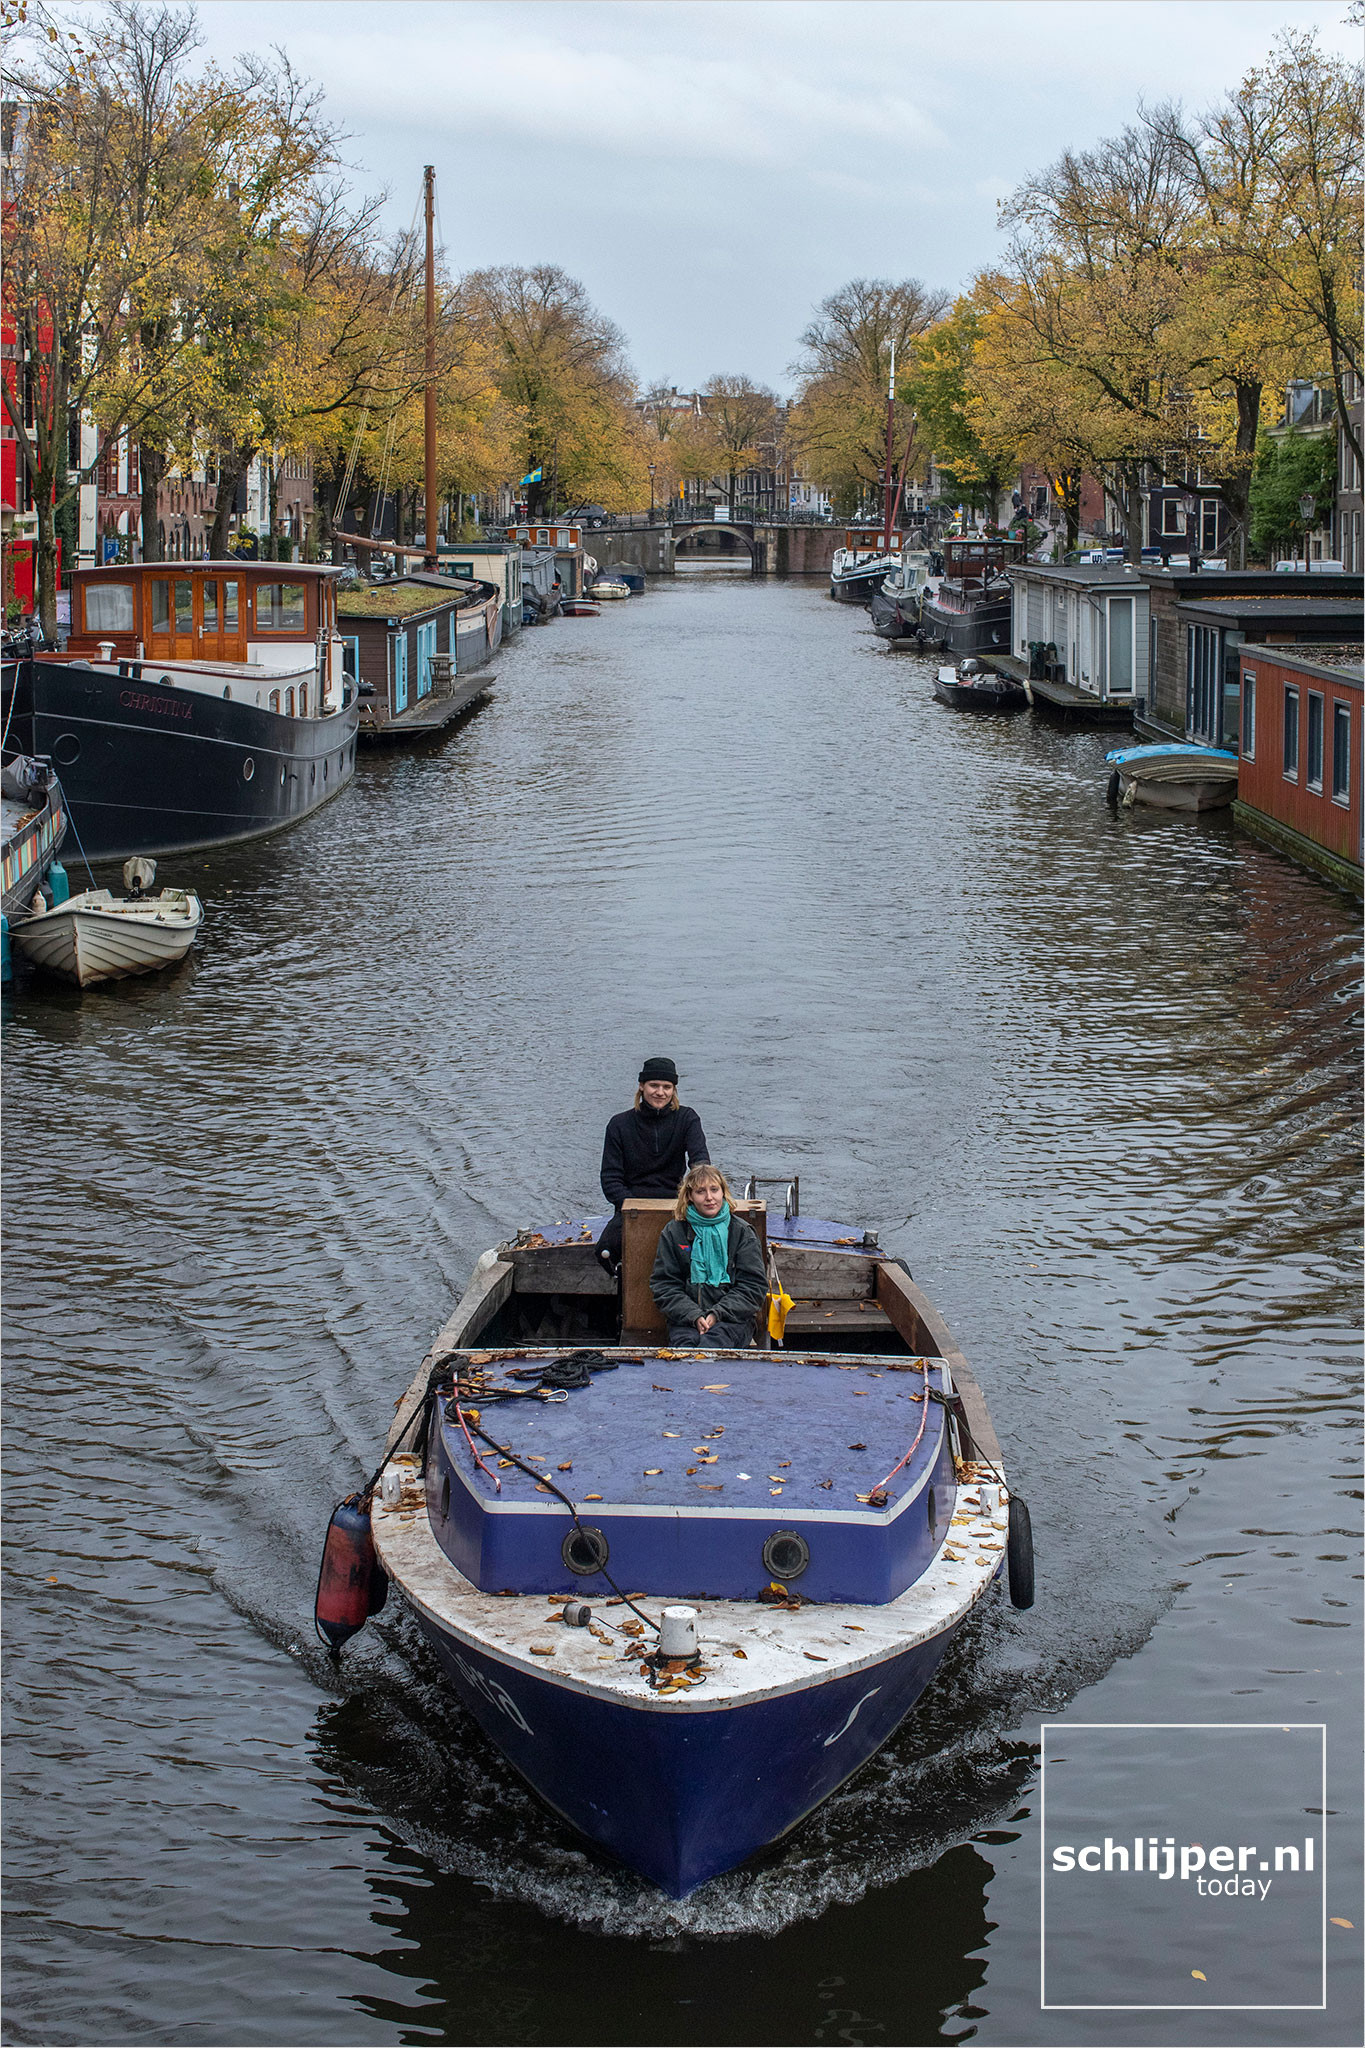 Nederland, Amsterdam, 27 oktober 2020